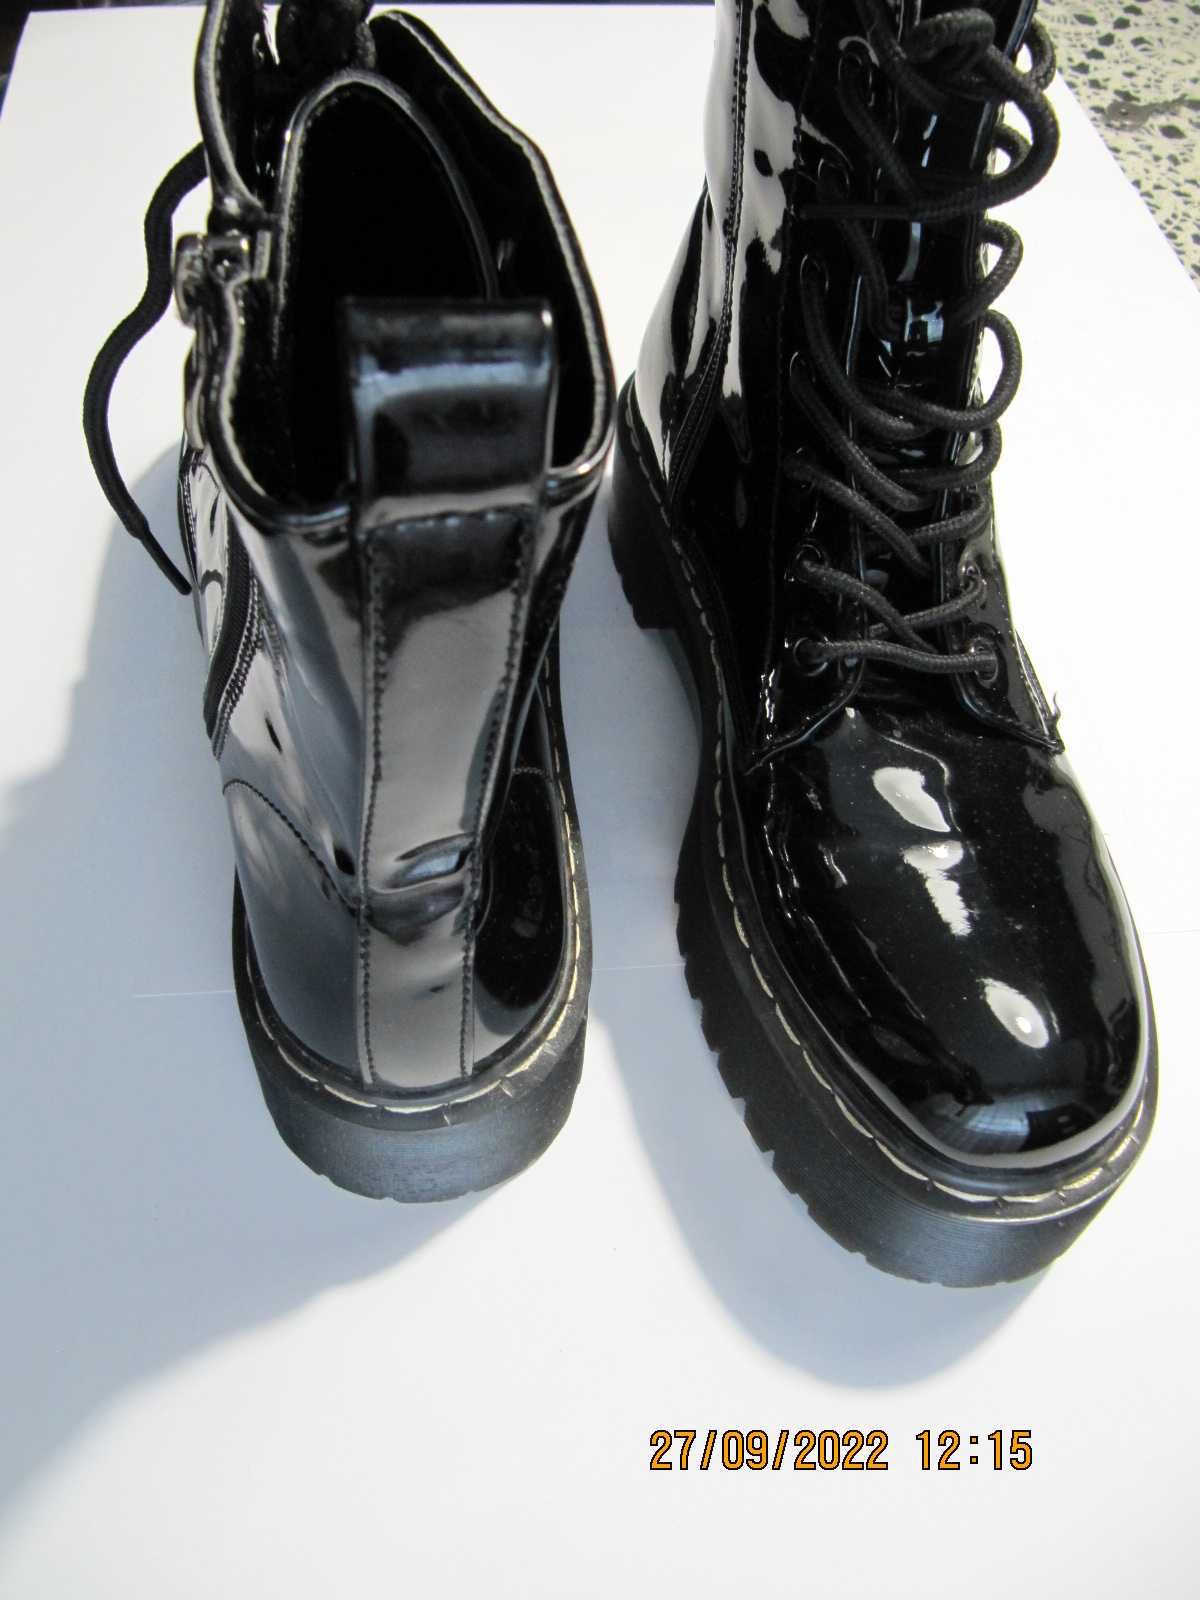 Дамски черни лачени обувки - номер 39